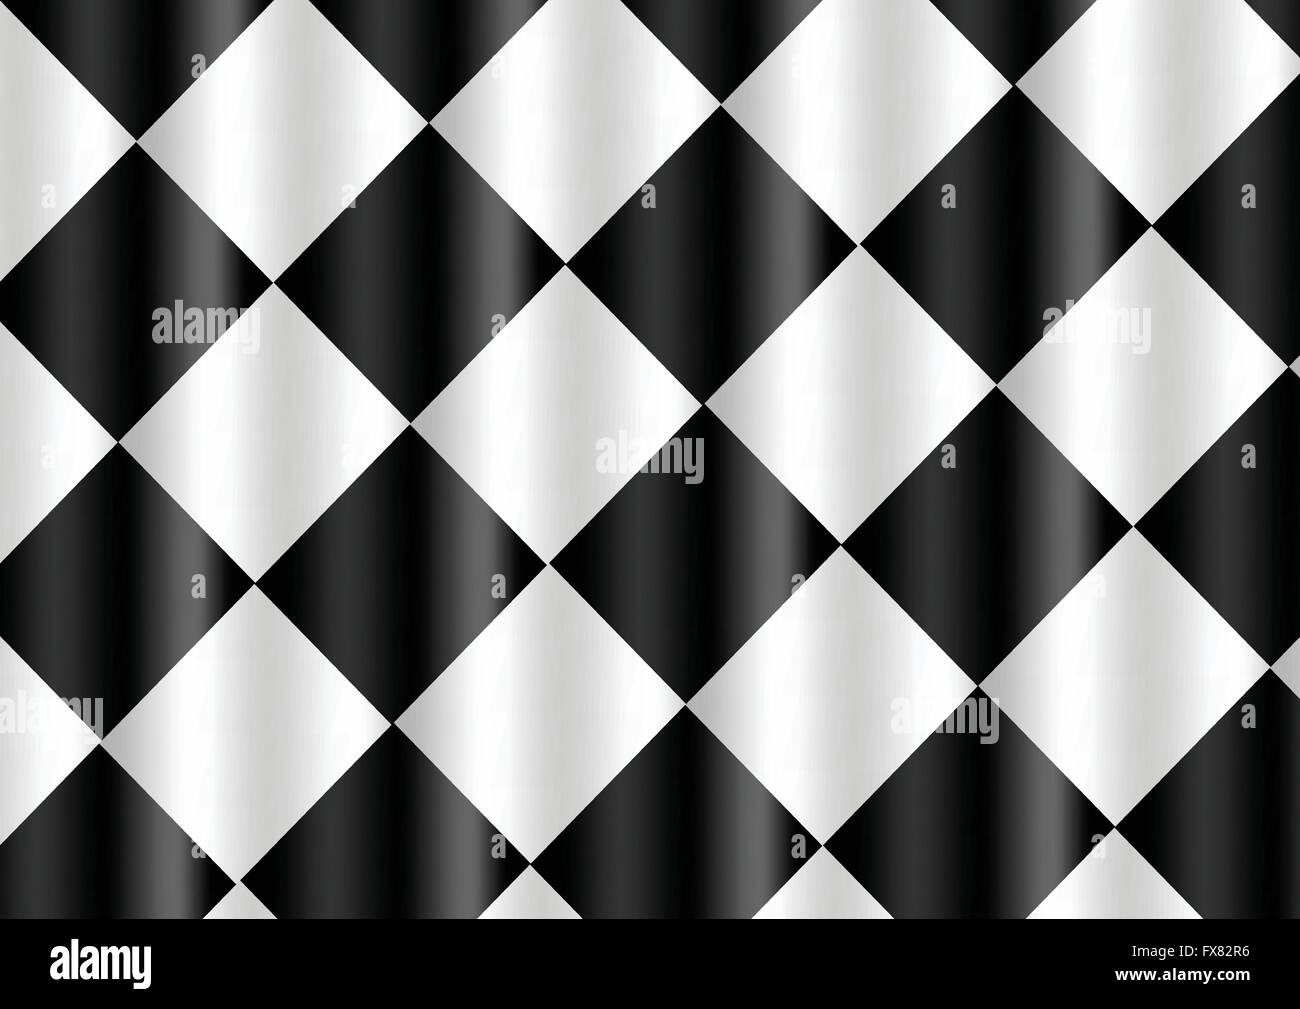 Racing flags Background checkered flag themes idea design Stock Vector